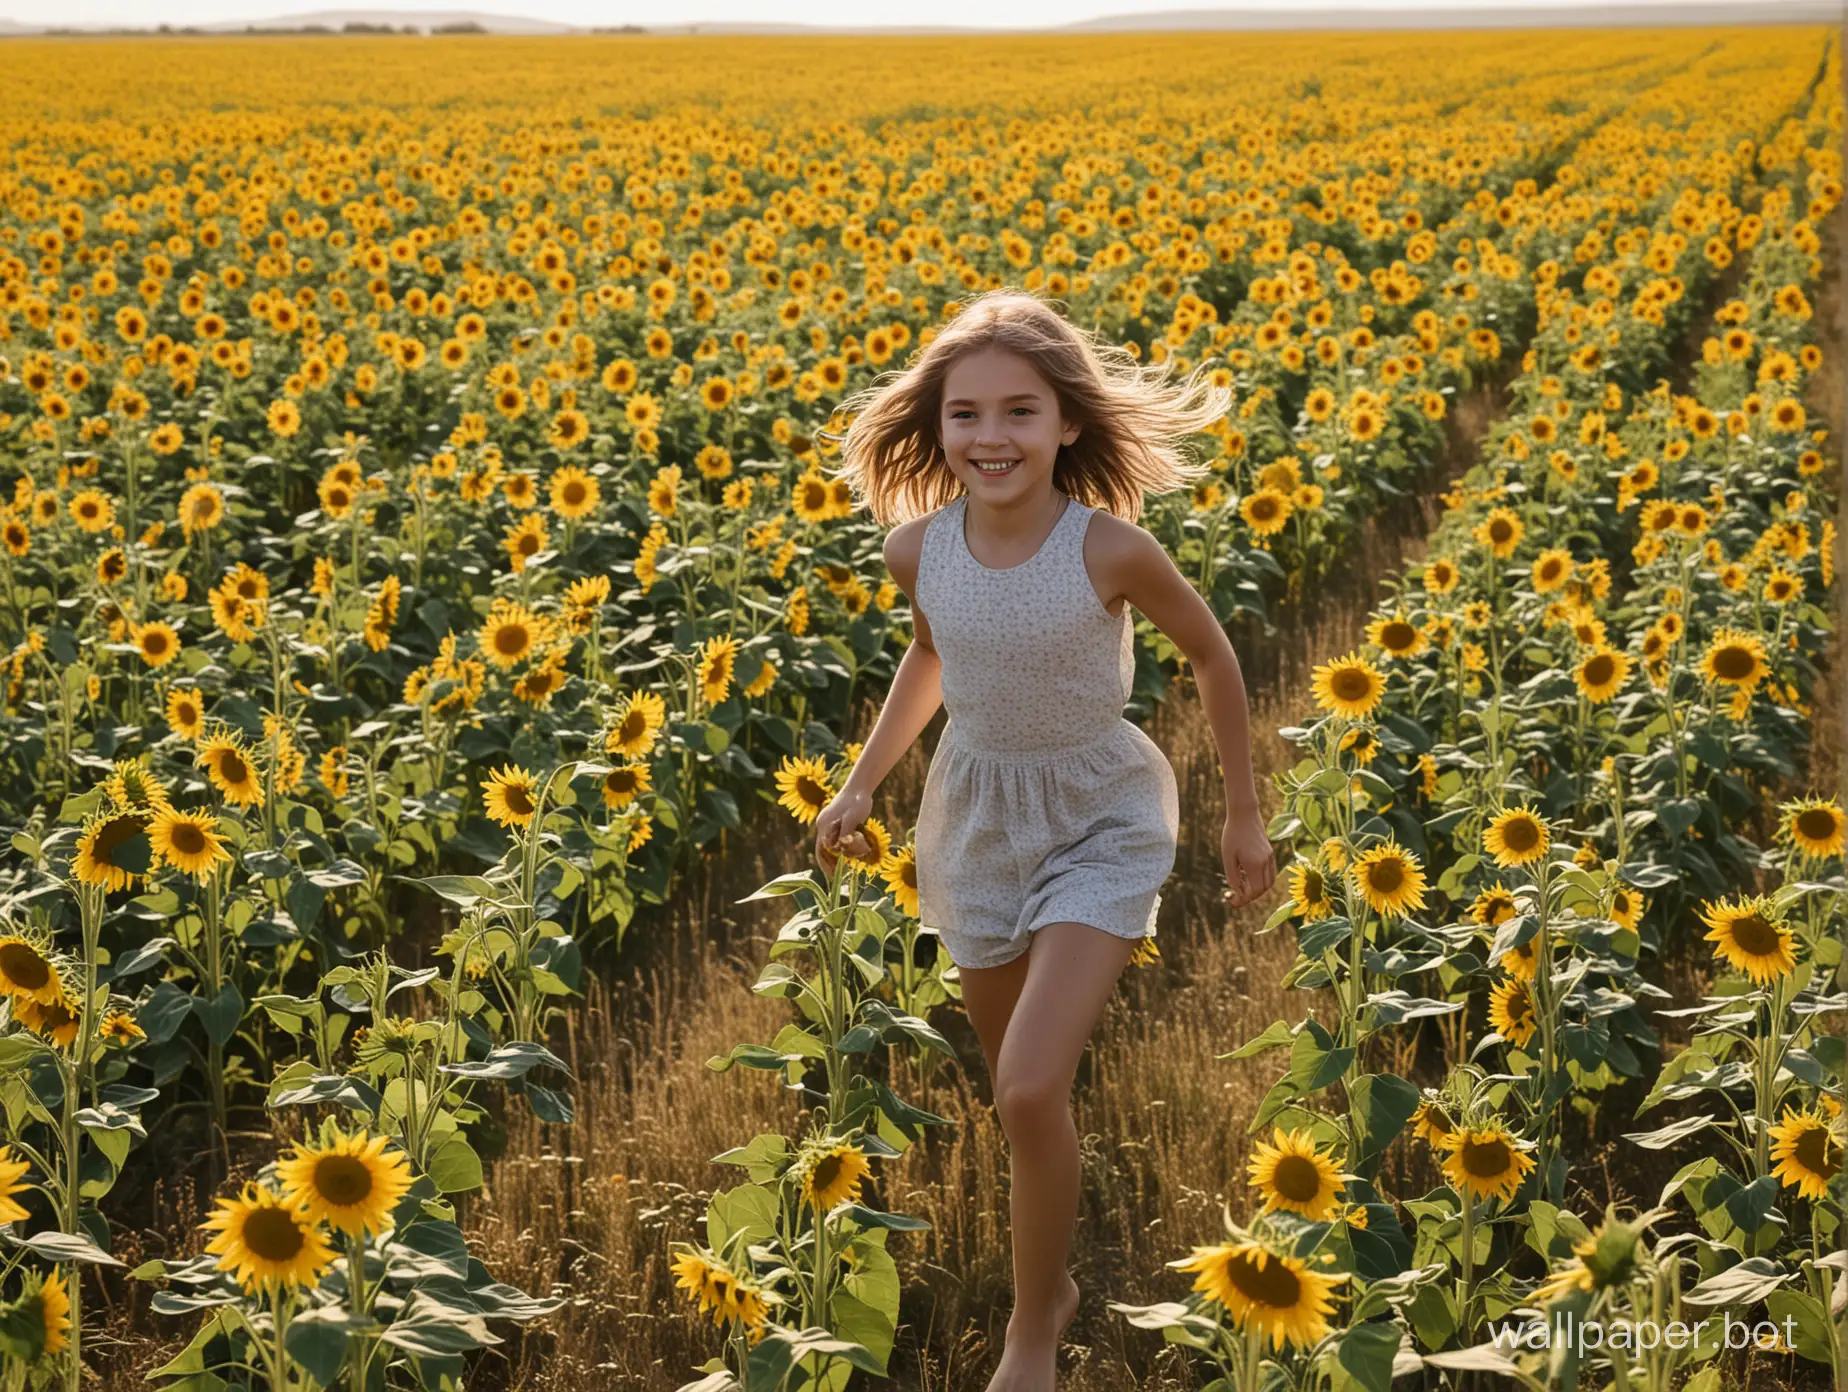 Joyful-Young-Girl-Running-in-a-Sunflower-Field-at-Sunset